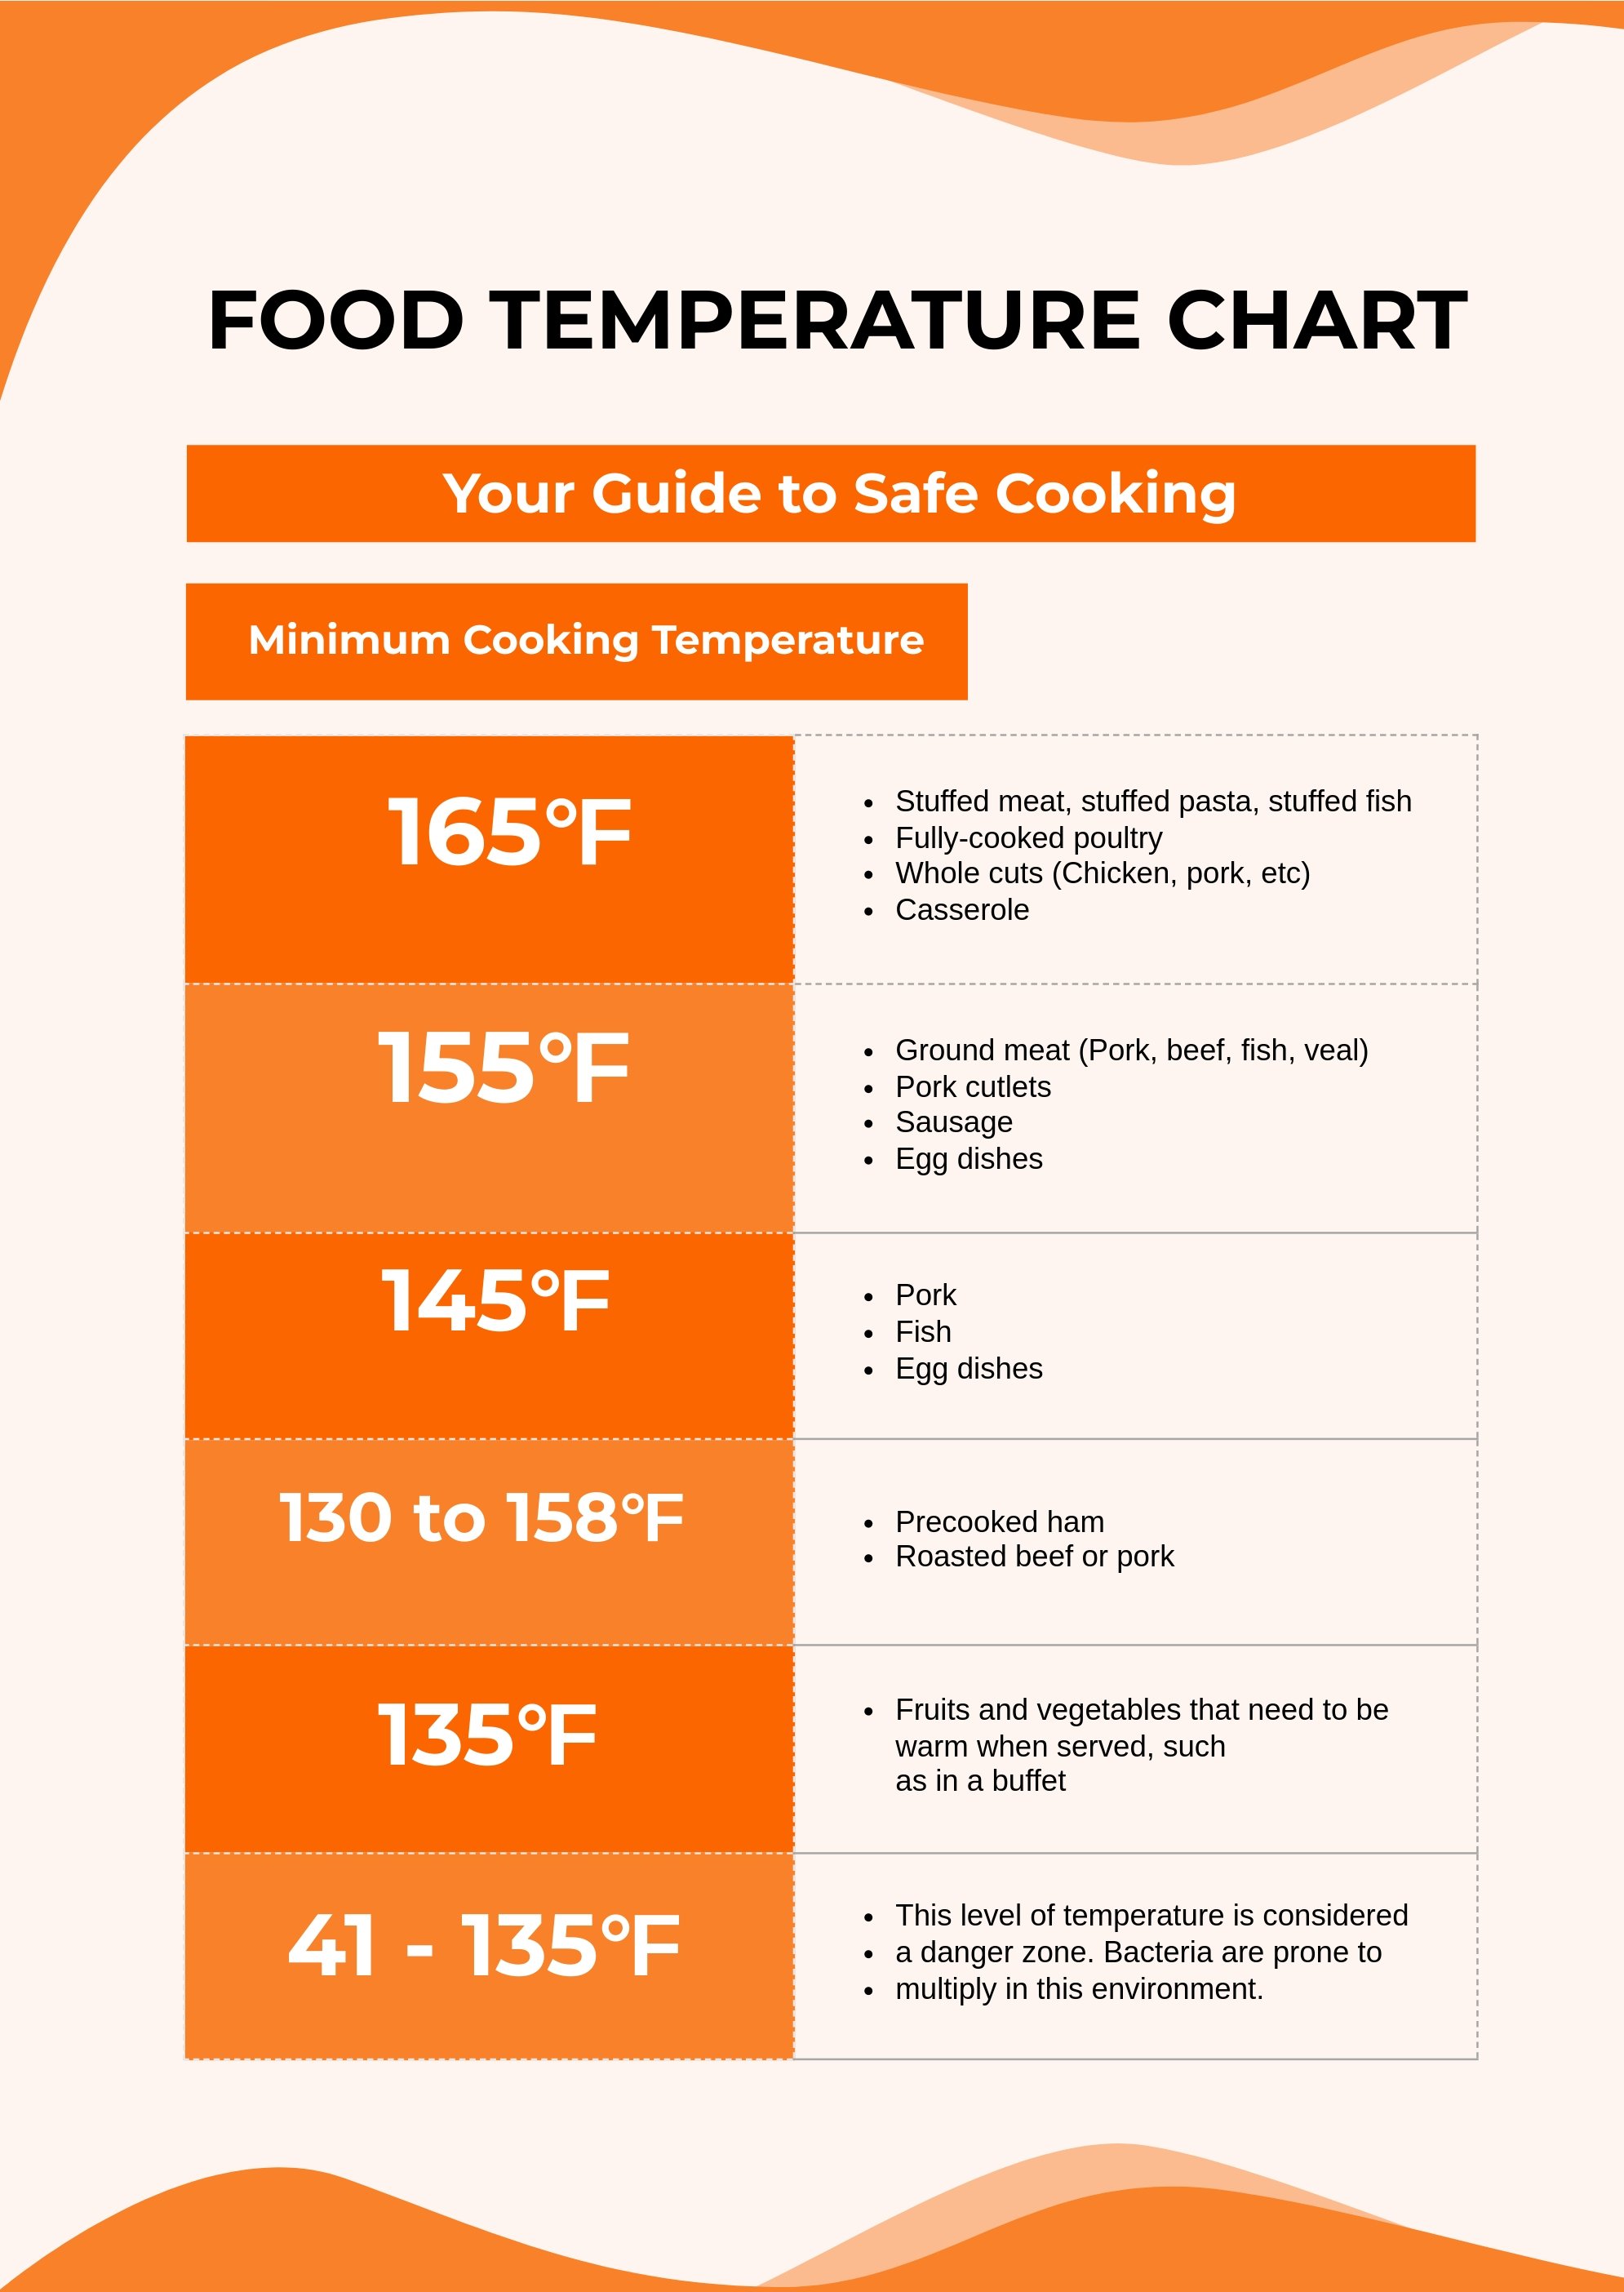 https://images.template.net/116633/food-temperature-chart-1xry0.jpeg